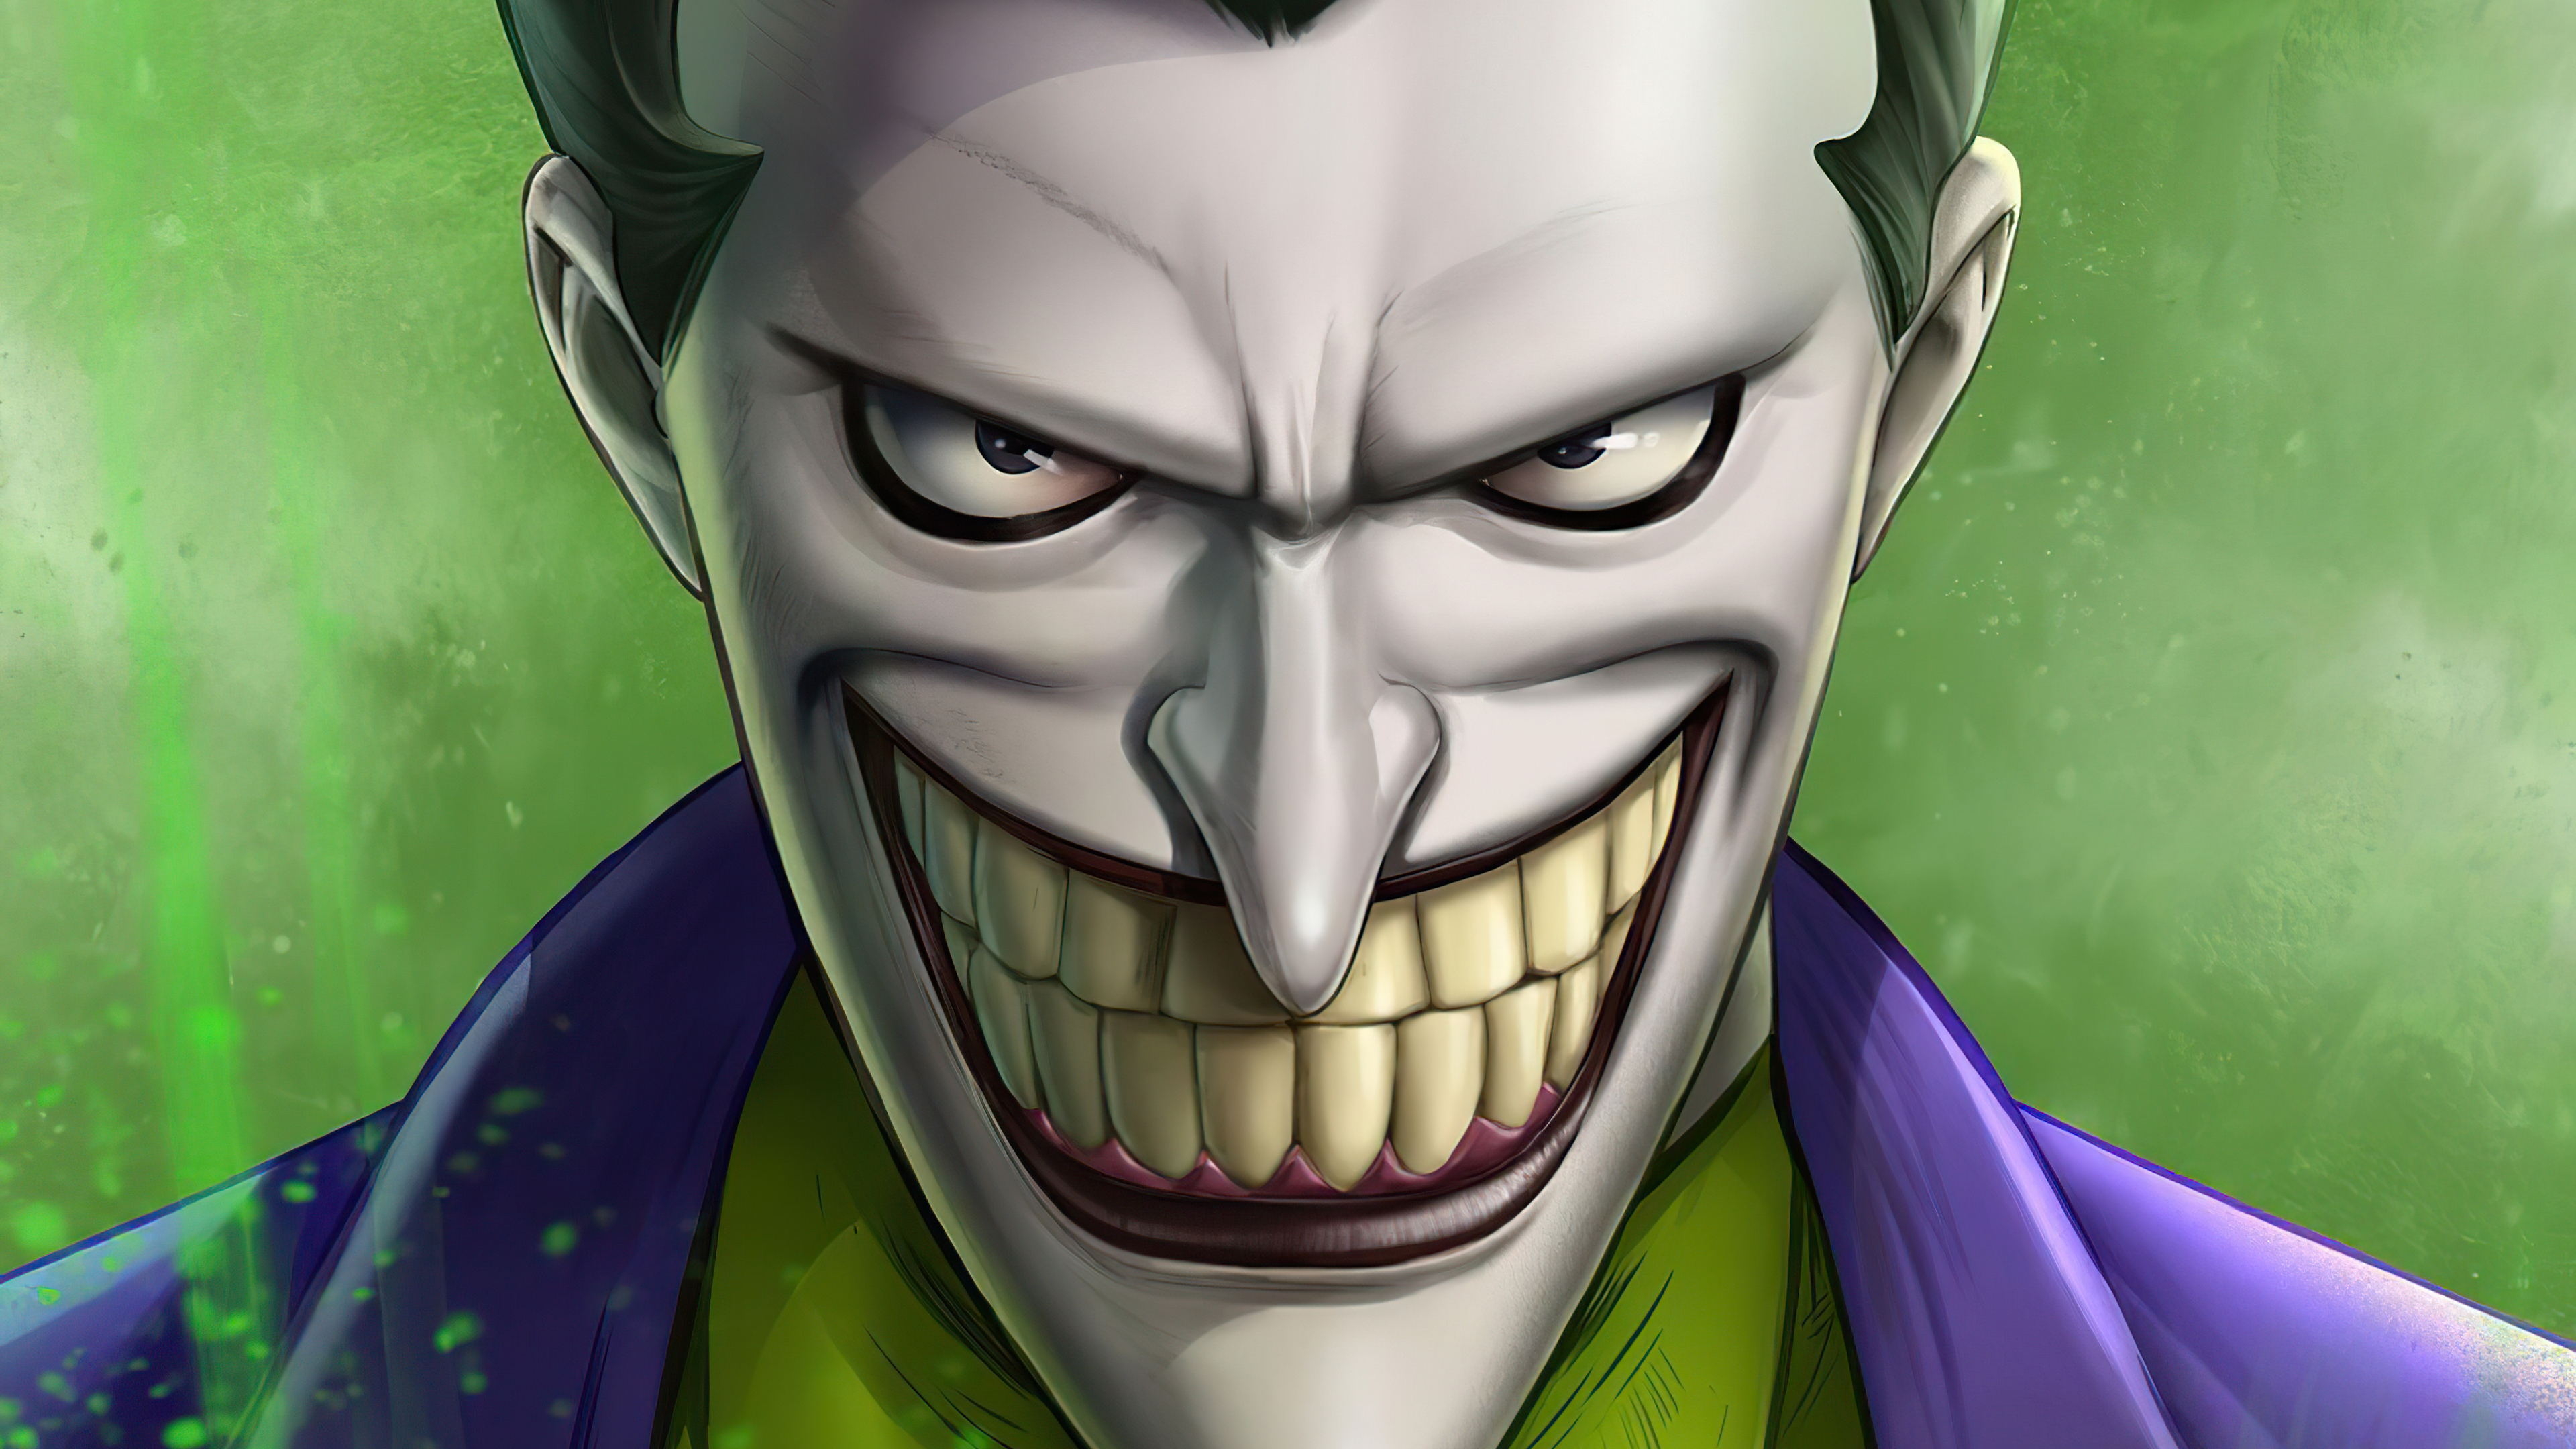 Creepy Joker Smile Wallpaper Hd Artist 4k Wallpapers Images Photos Images